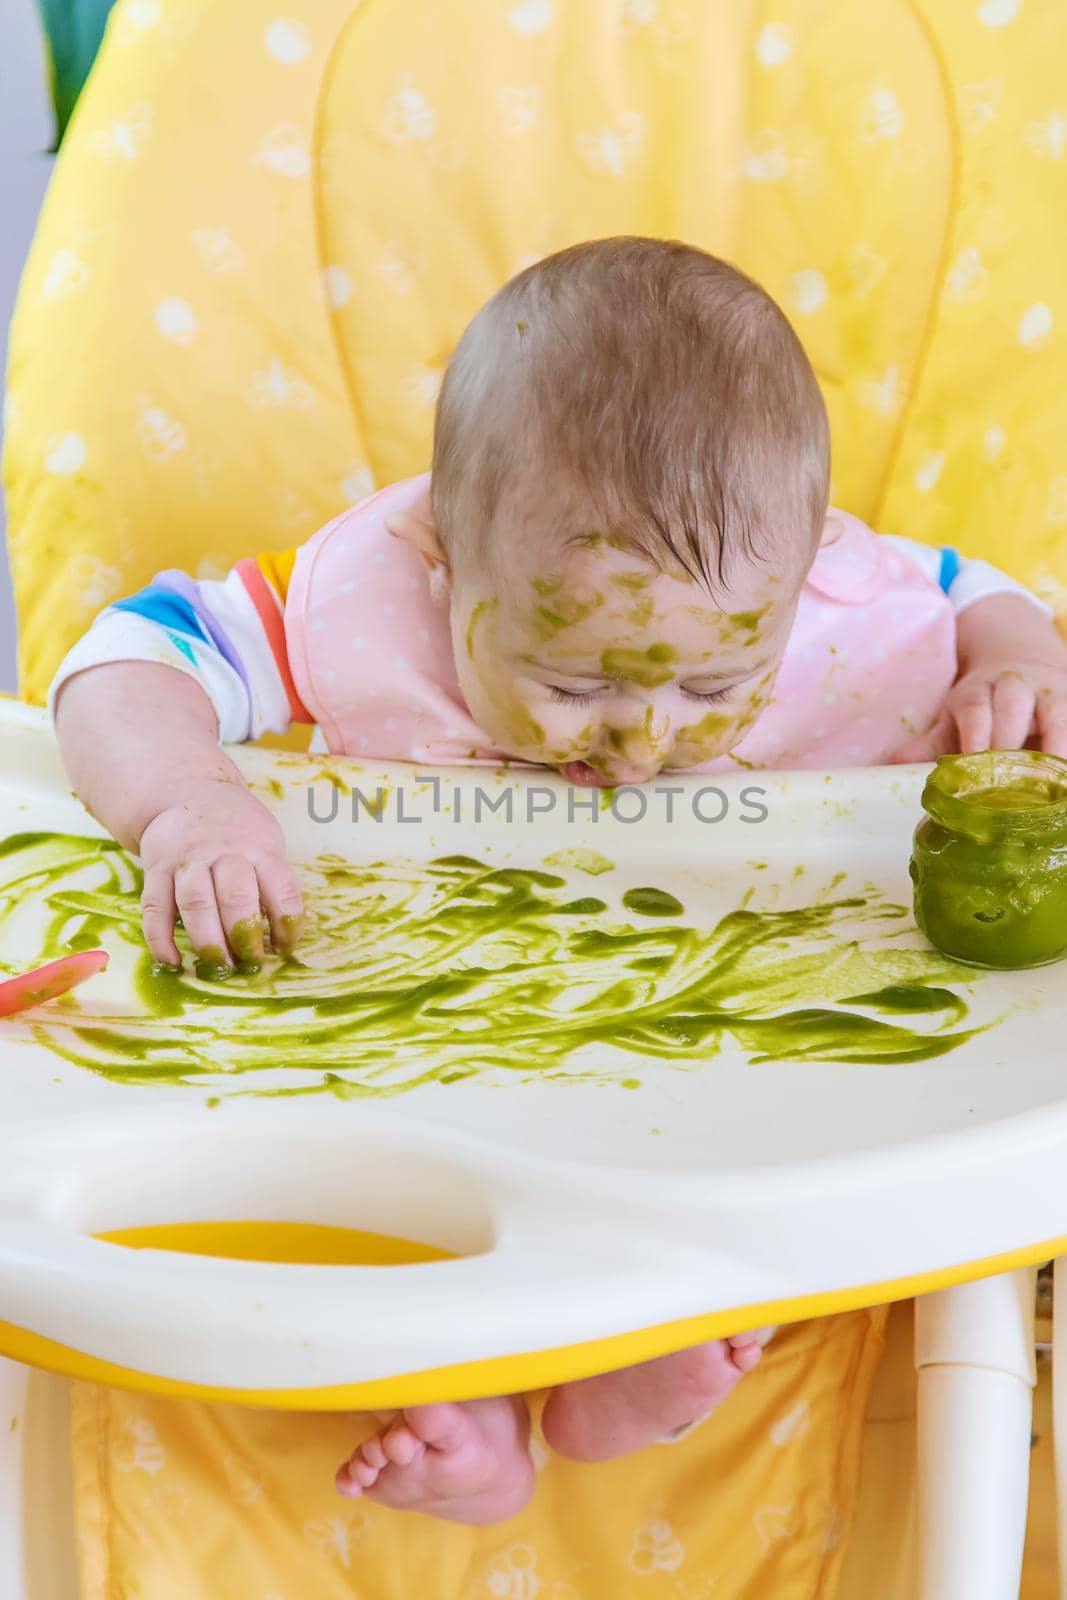 Little baby eats broccoli puree himself. Selective focus. People.